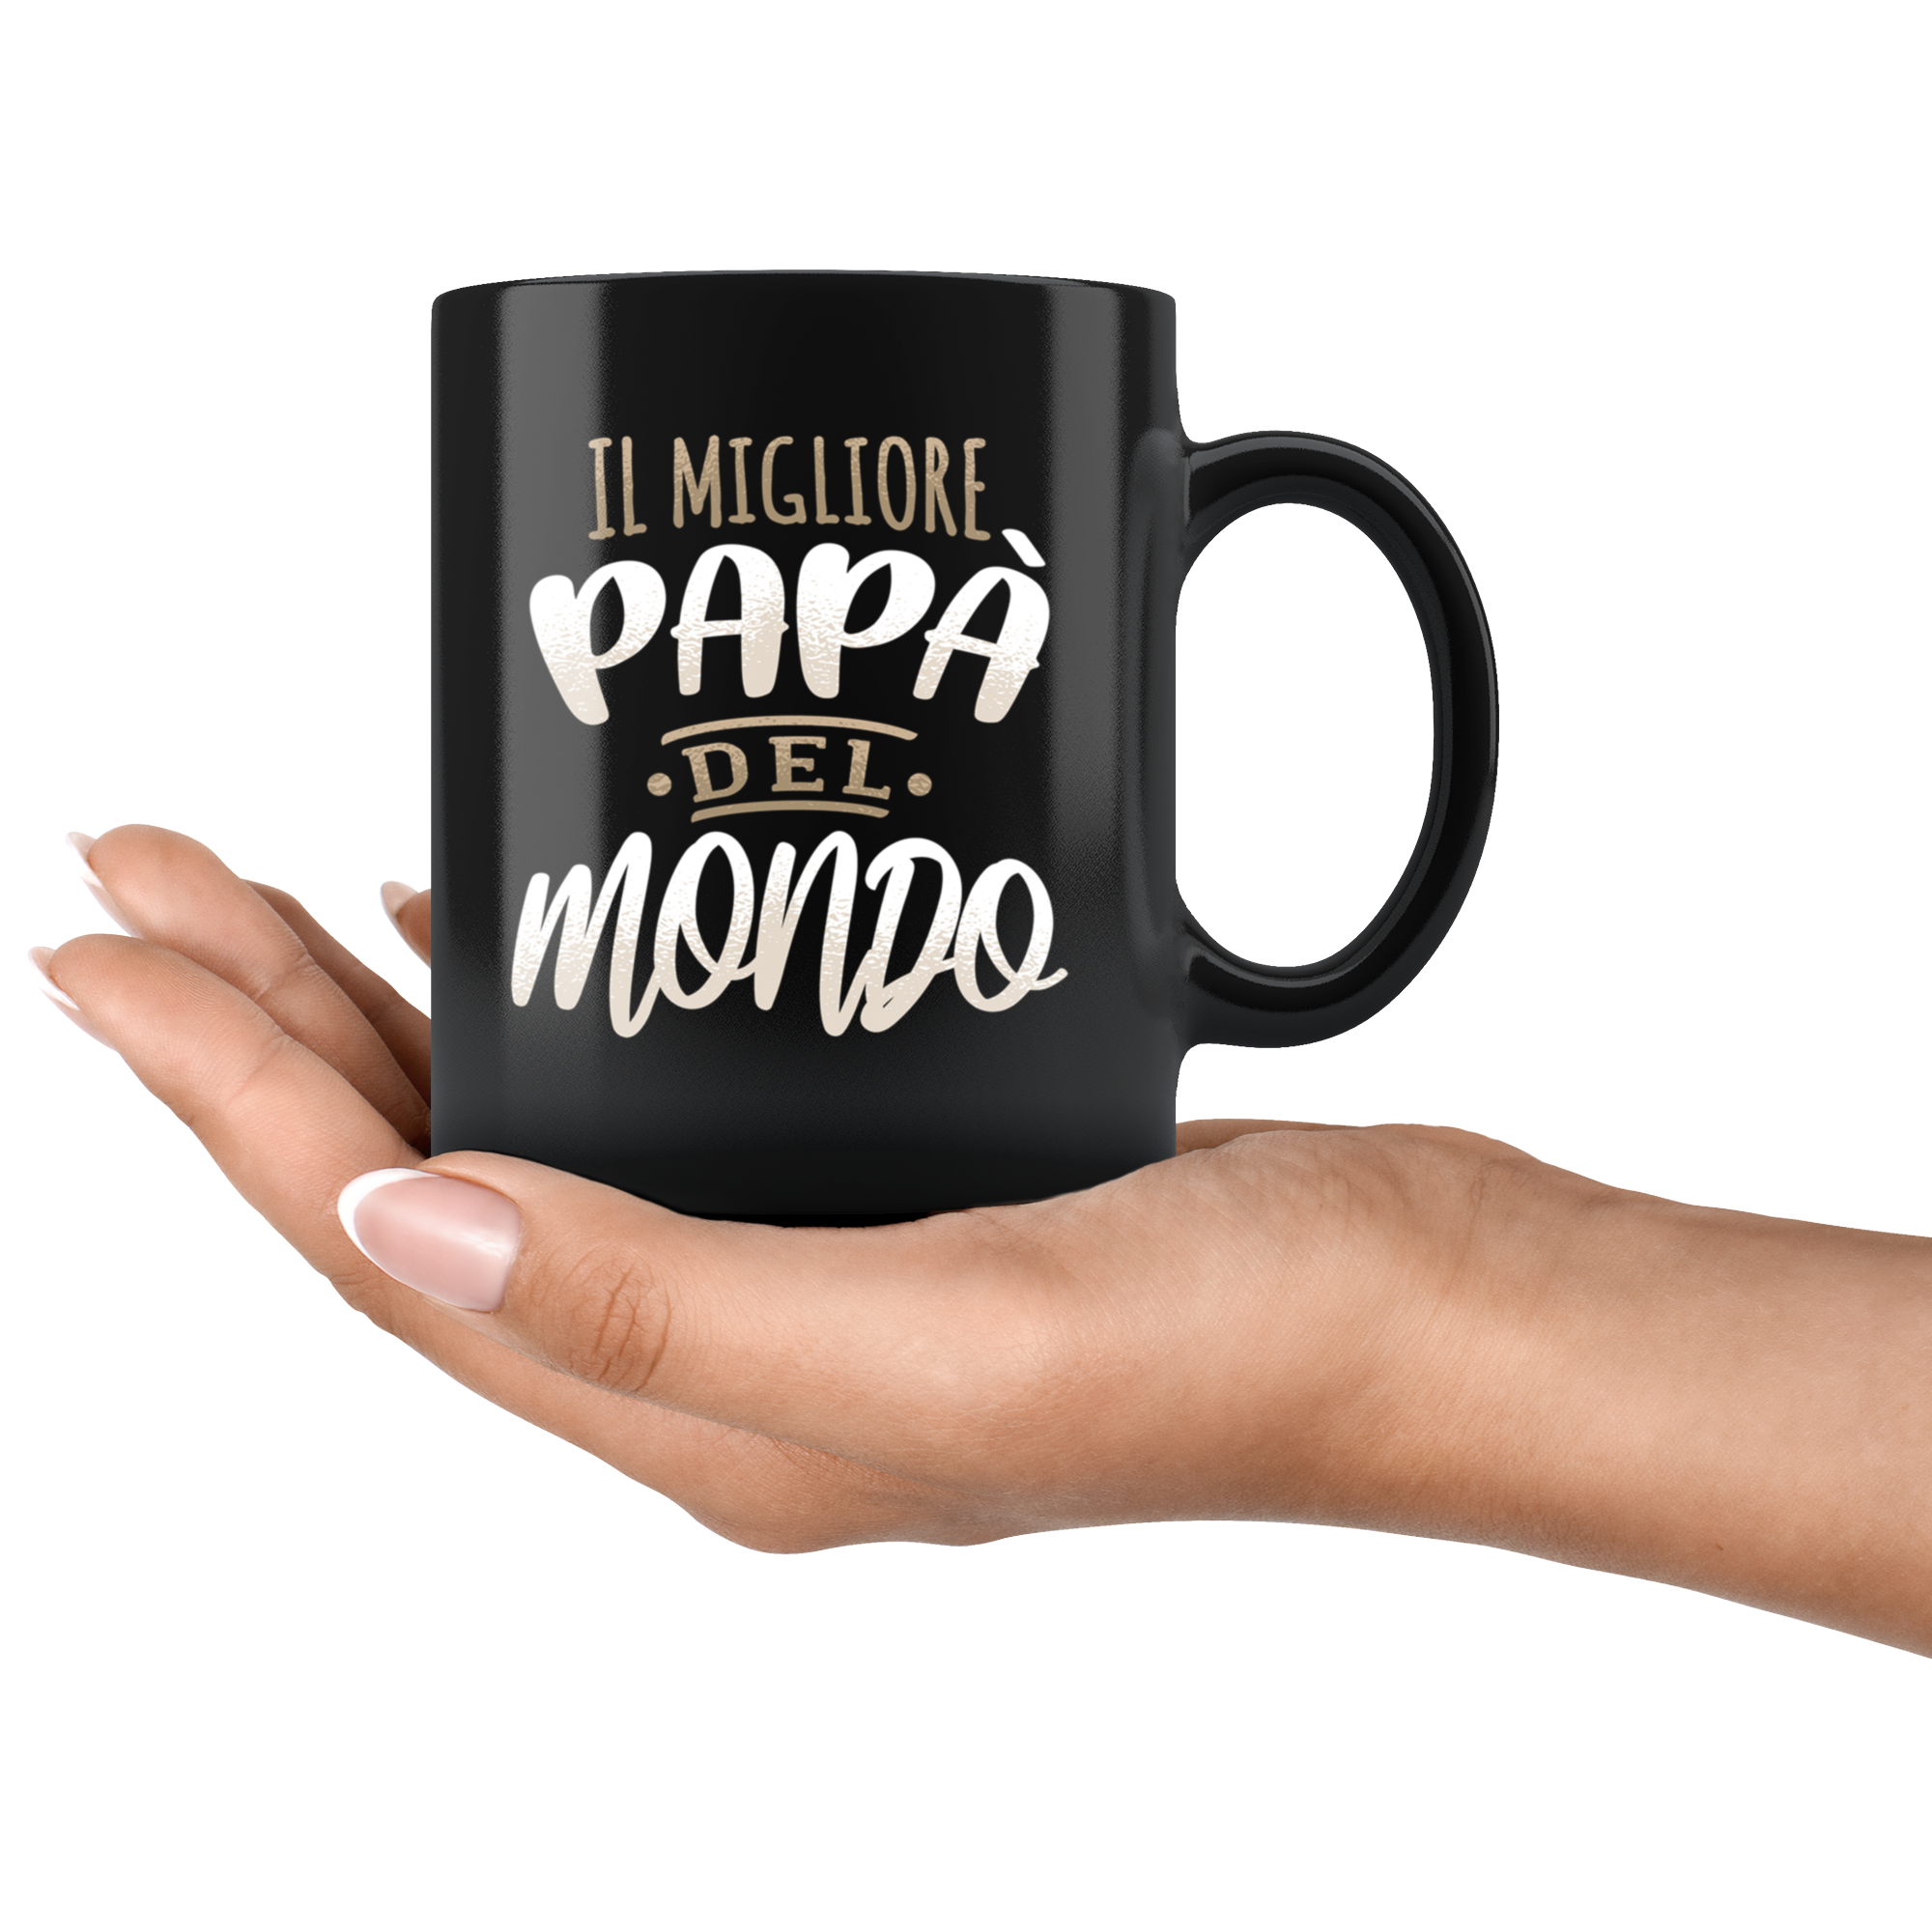 Papa Del Monde Mug